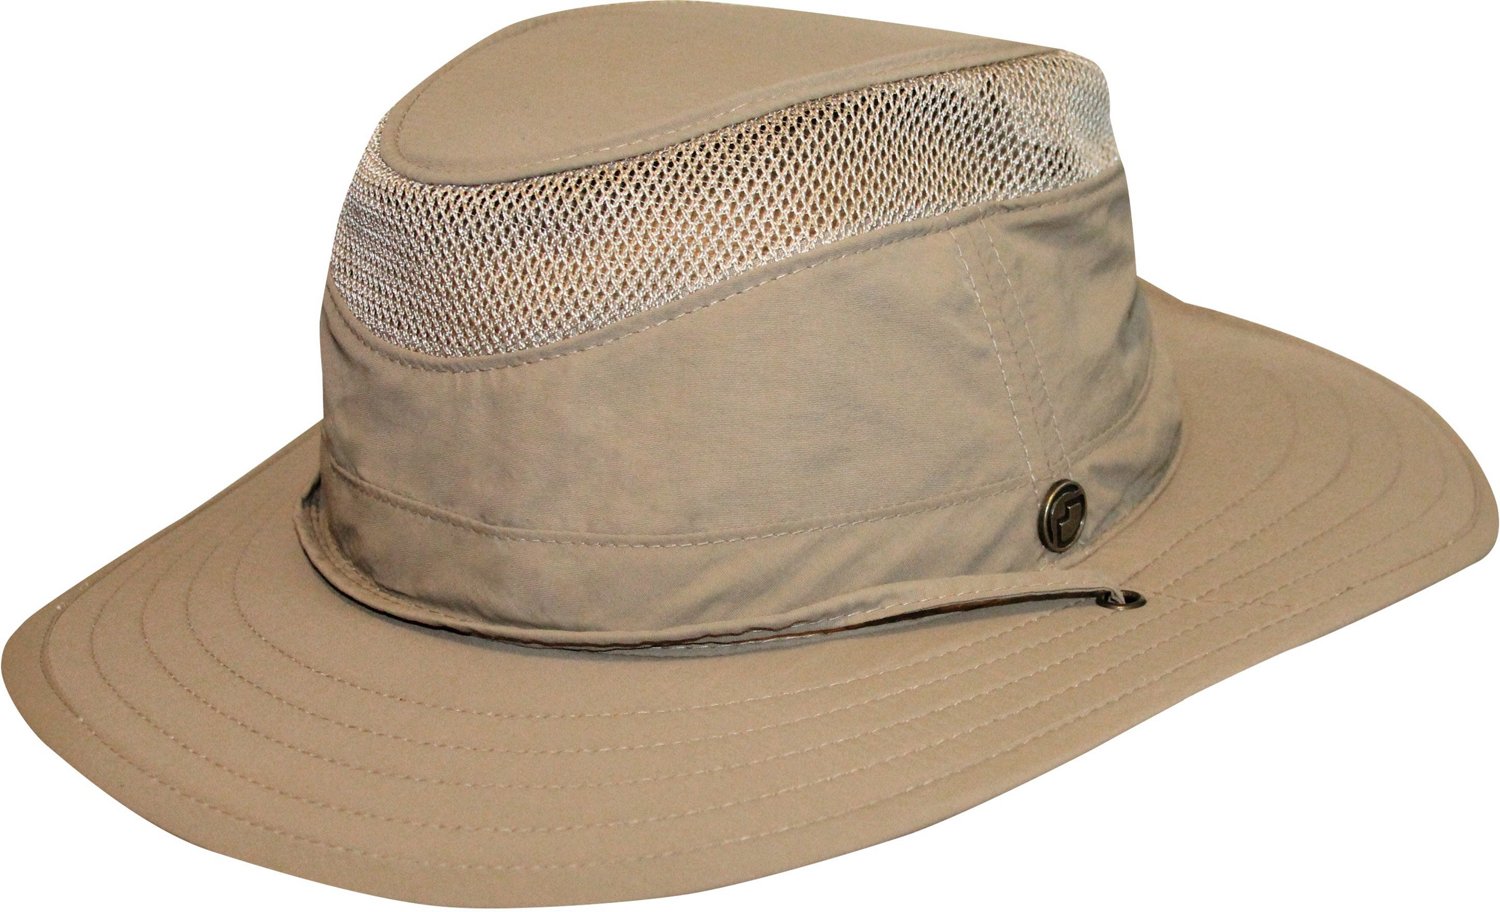 Magellan Outdoors Men's Camper Boonie Hat